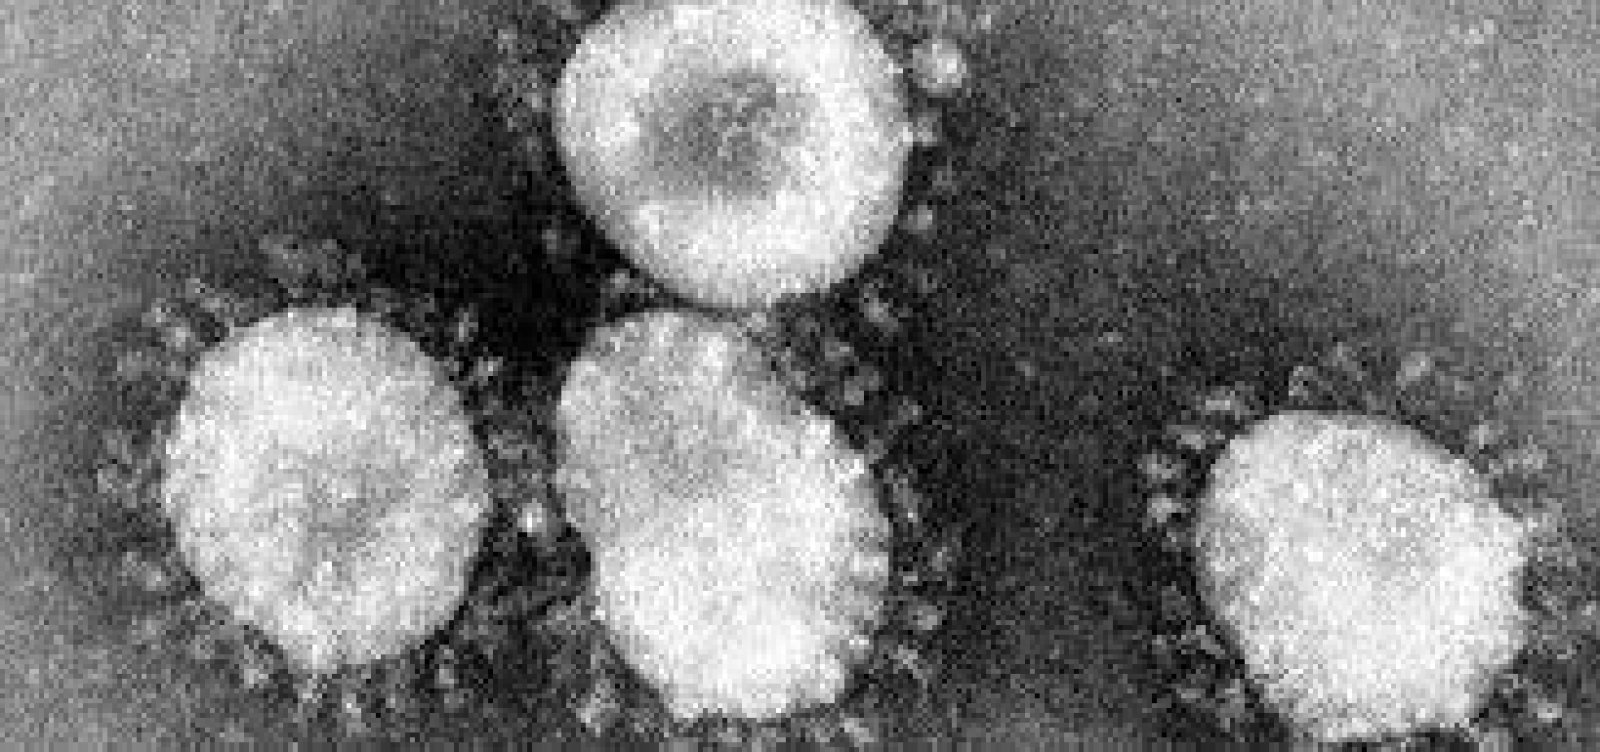 Variante delta do coronavírus, identificada na Índia, é 40% mais transmissível, aponta Reino Unido 